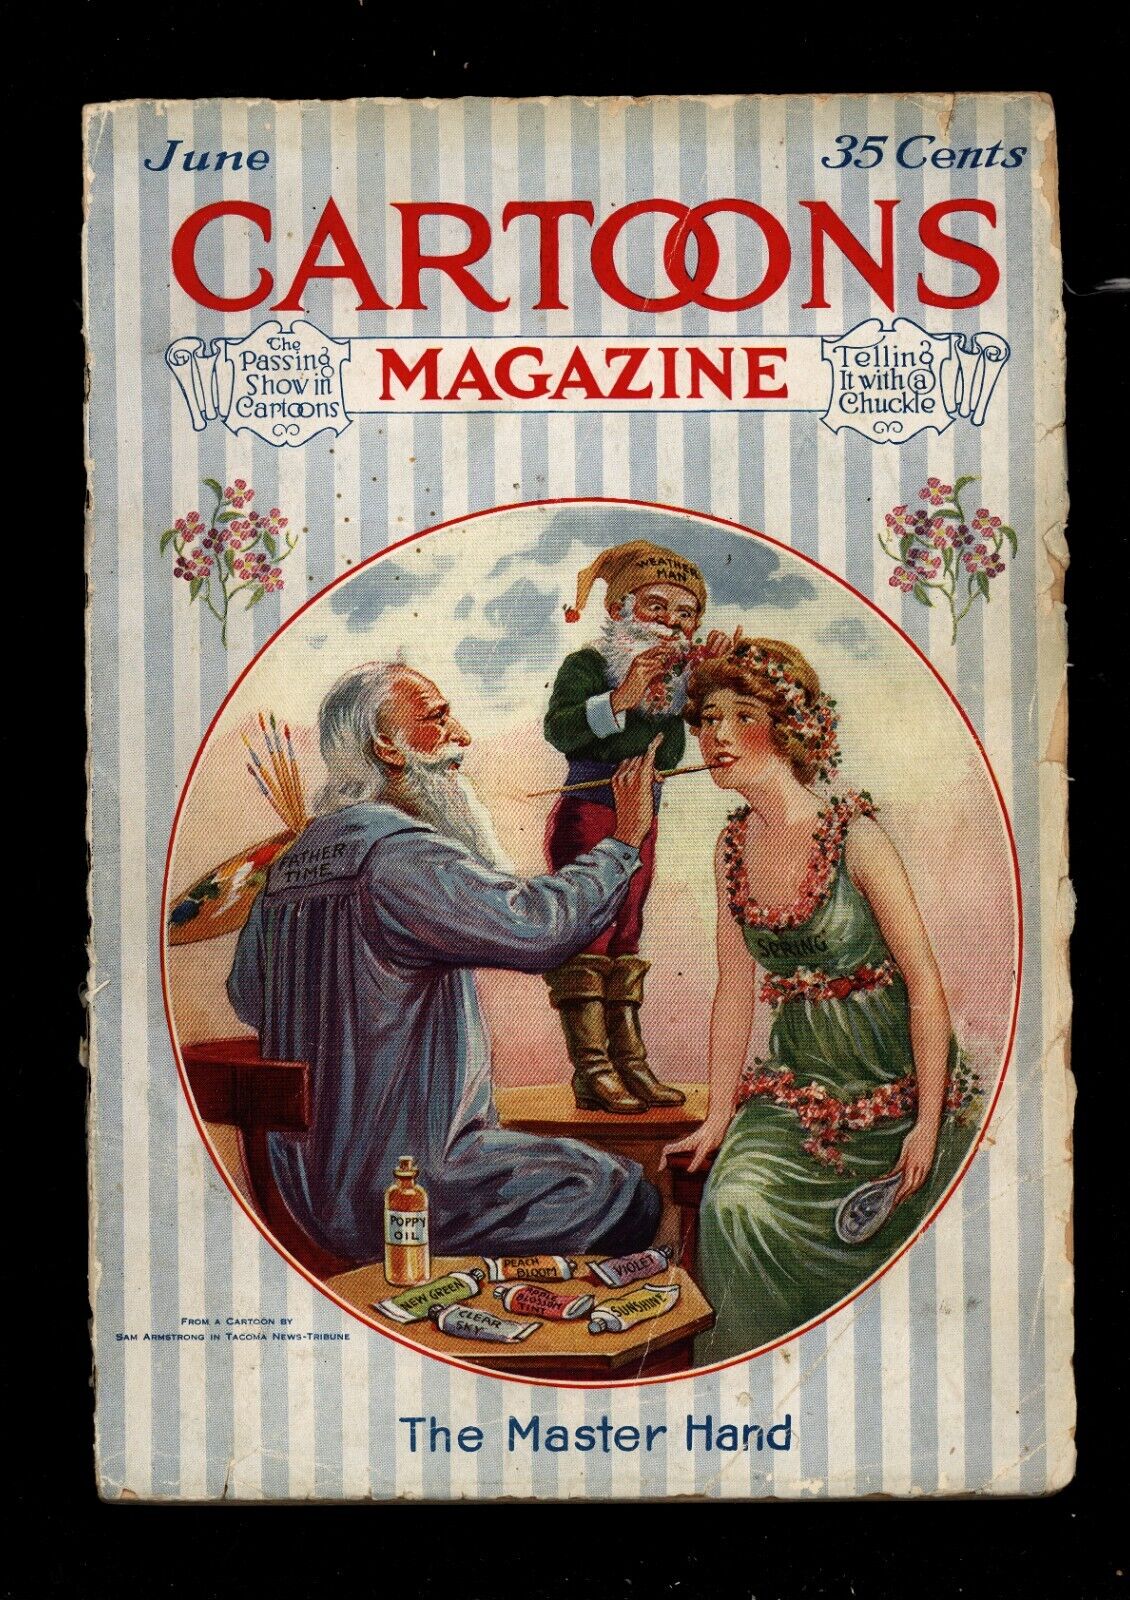 Cartoons Magazine June 1921 "The Master Hand" Pulp